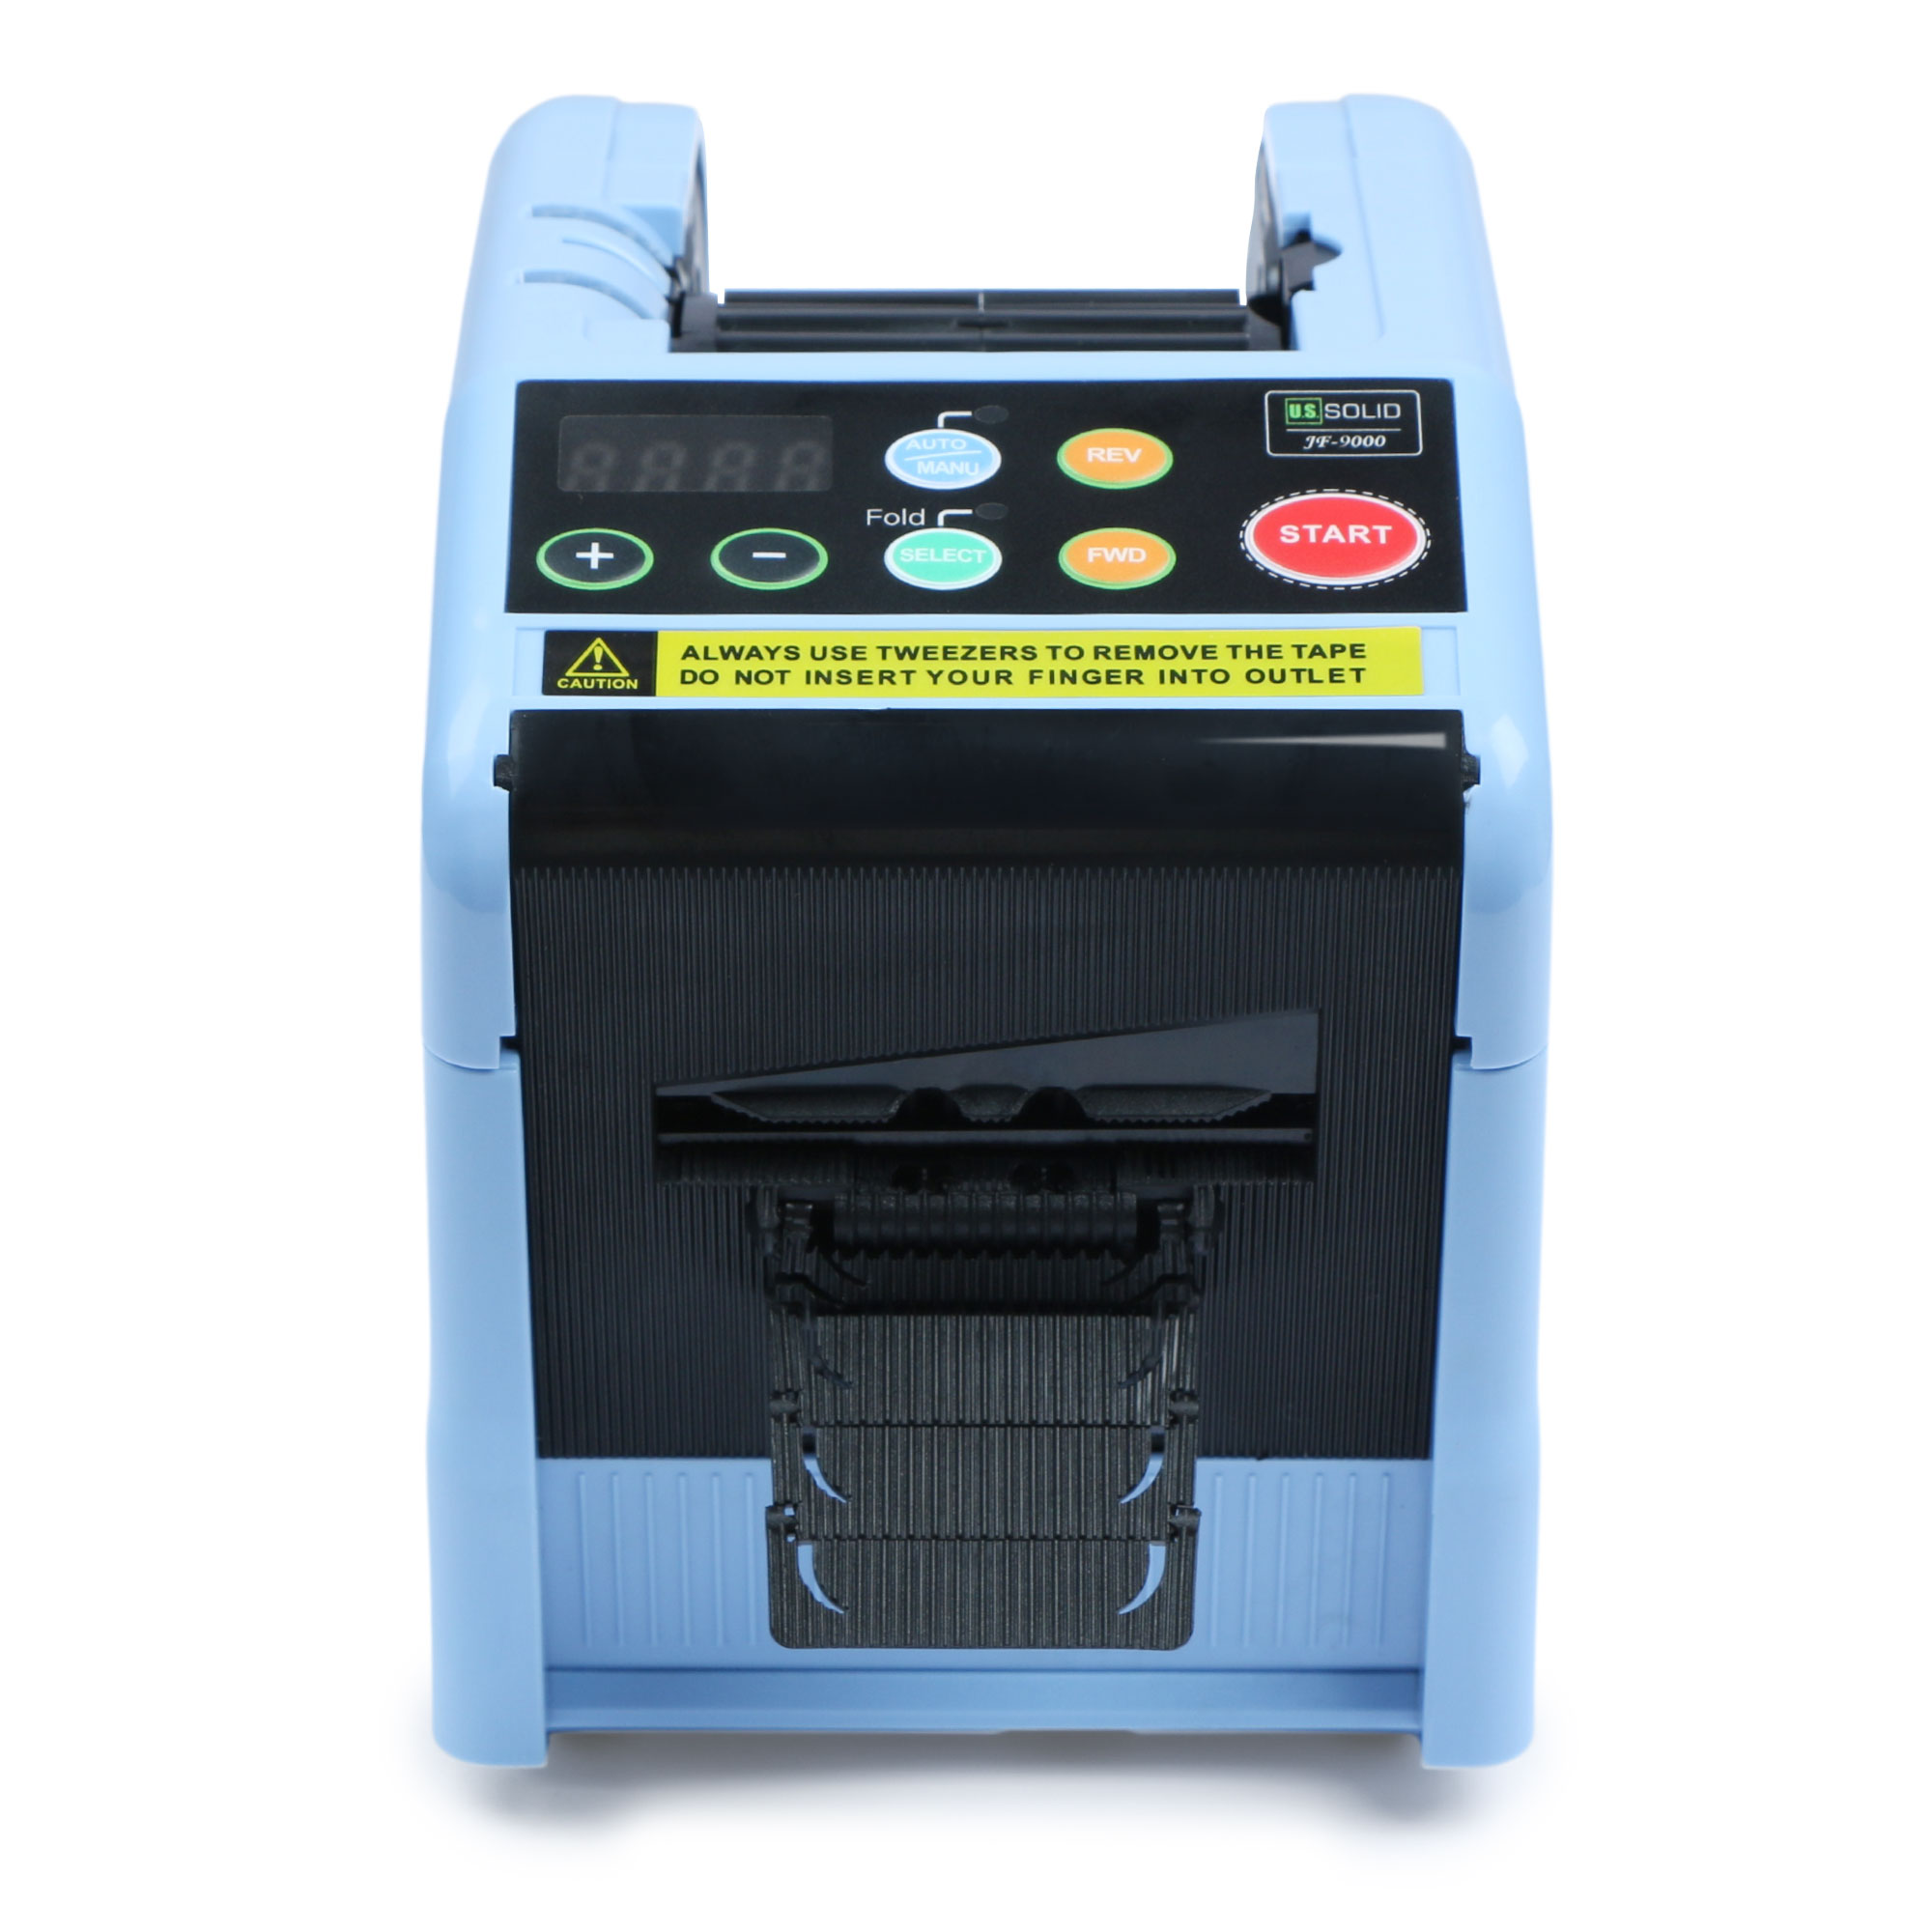 Model 5000 Manual Tape Cutter and Dispenser